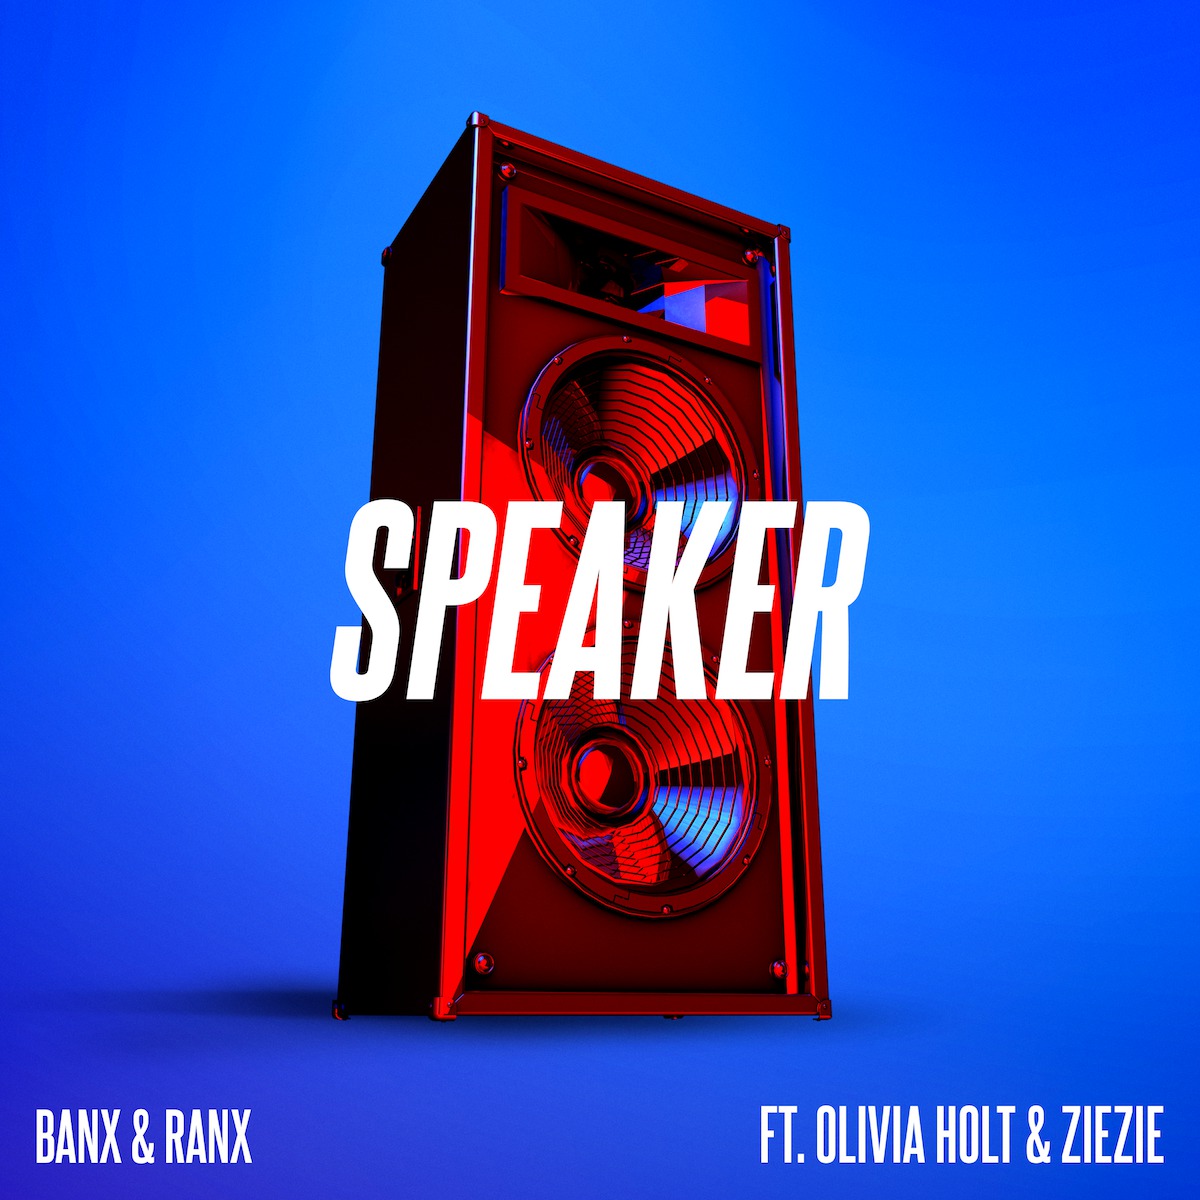 Banx & Ranx Drop New Single “Speaker” With Olivia Holt & ZieZie